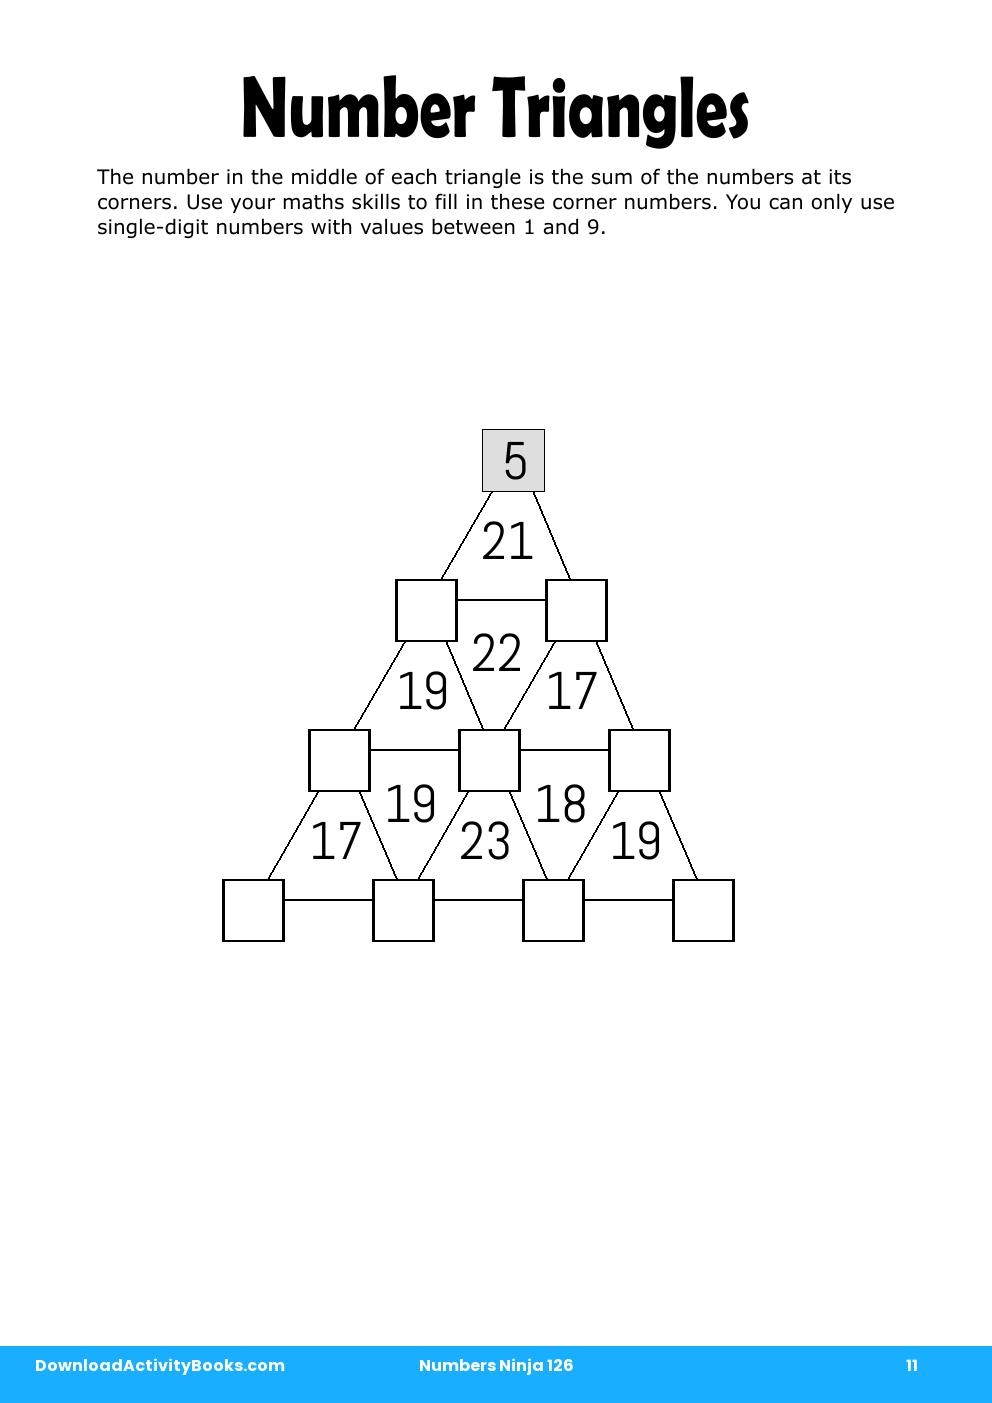 Number Triangles in Numbers Ninja 126